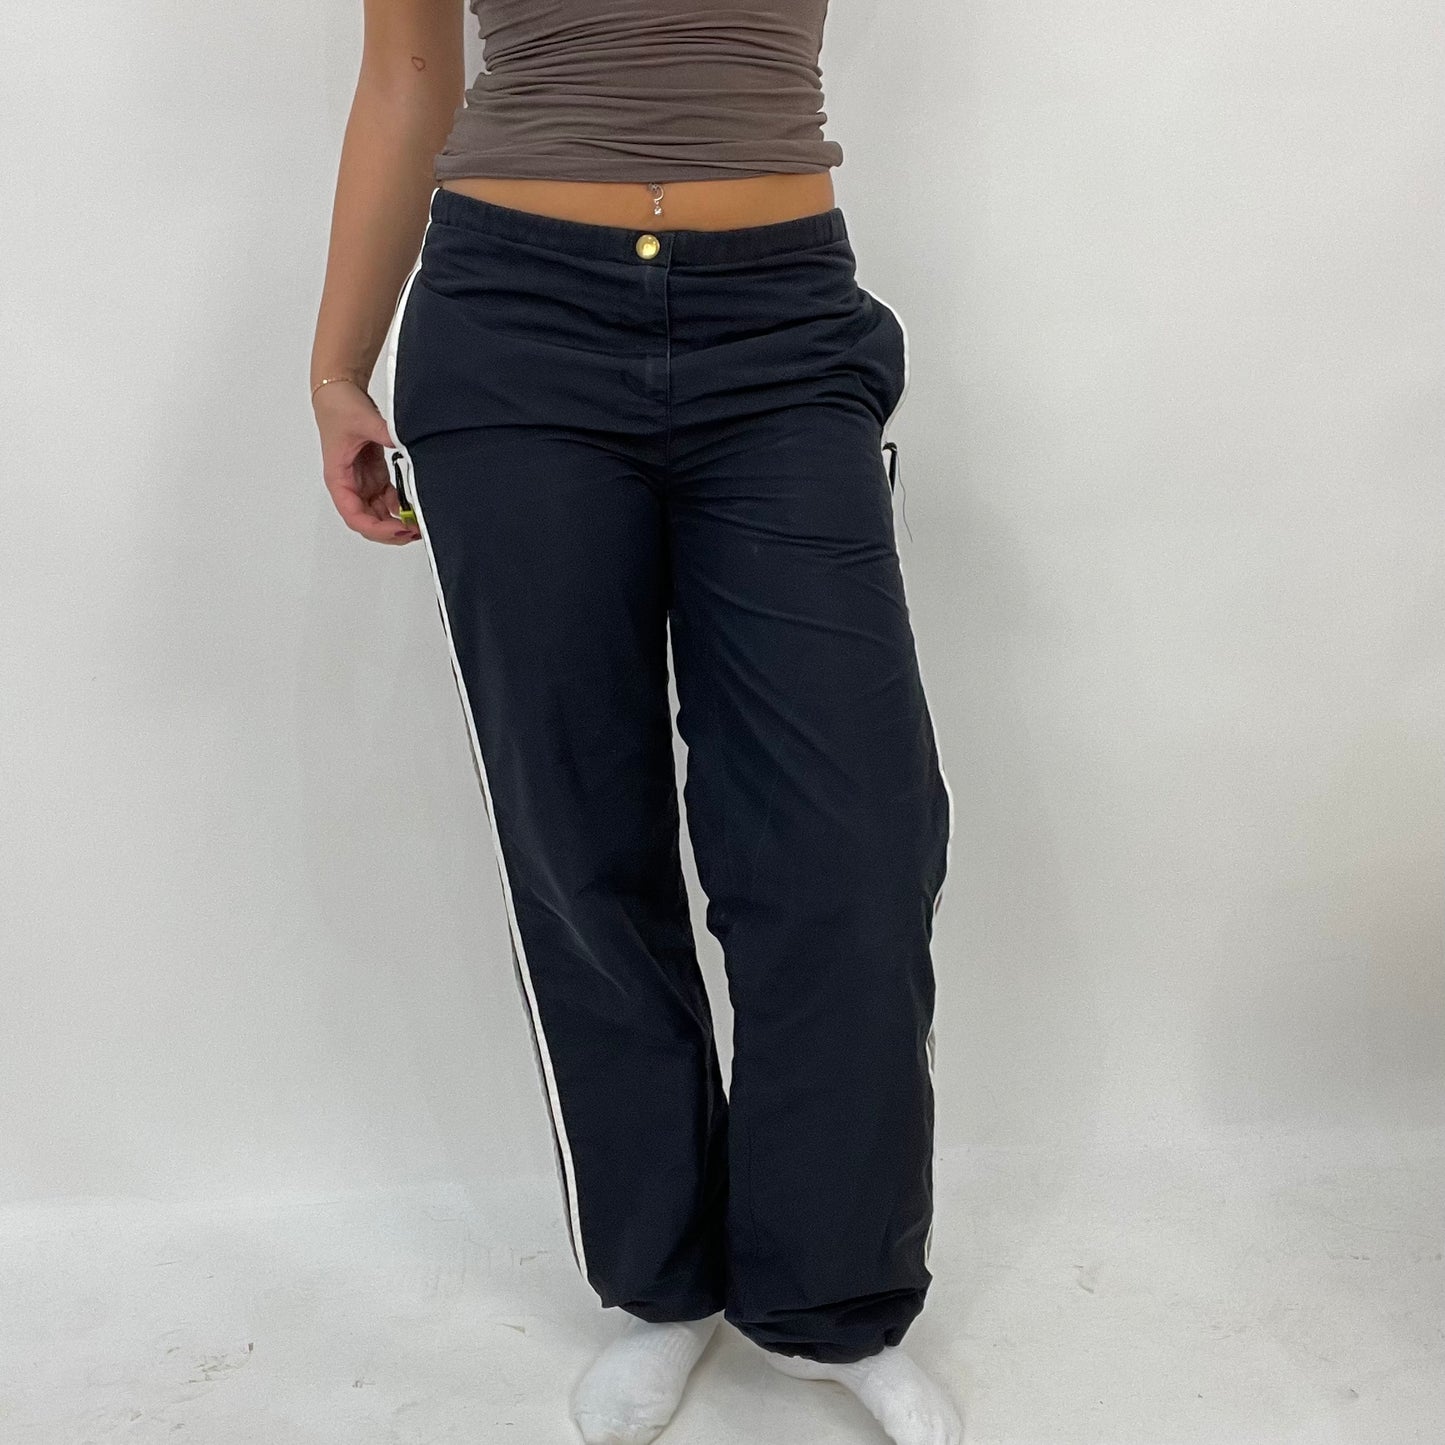 💻 BLOKECORE DROP | navy ski style trousers - small